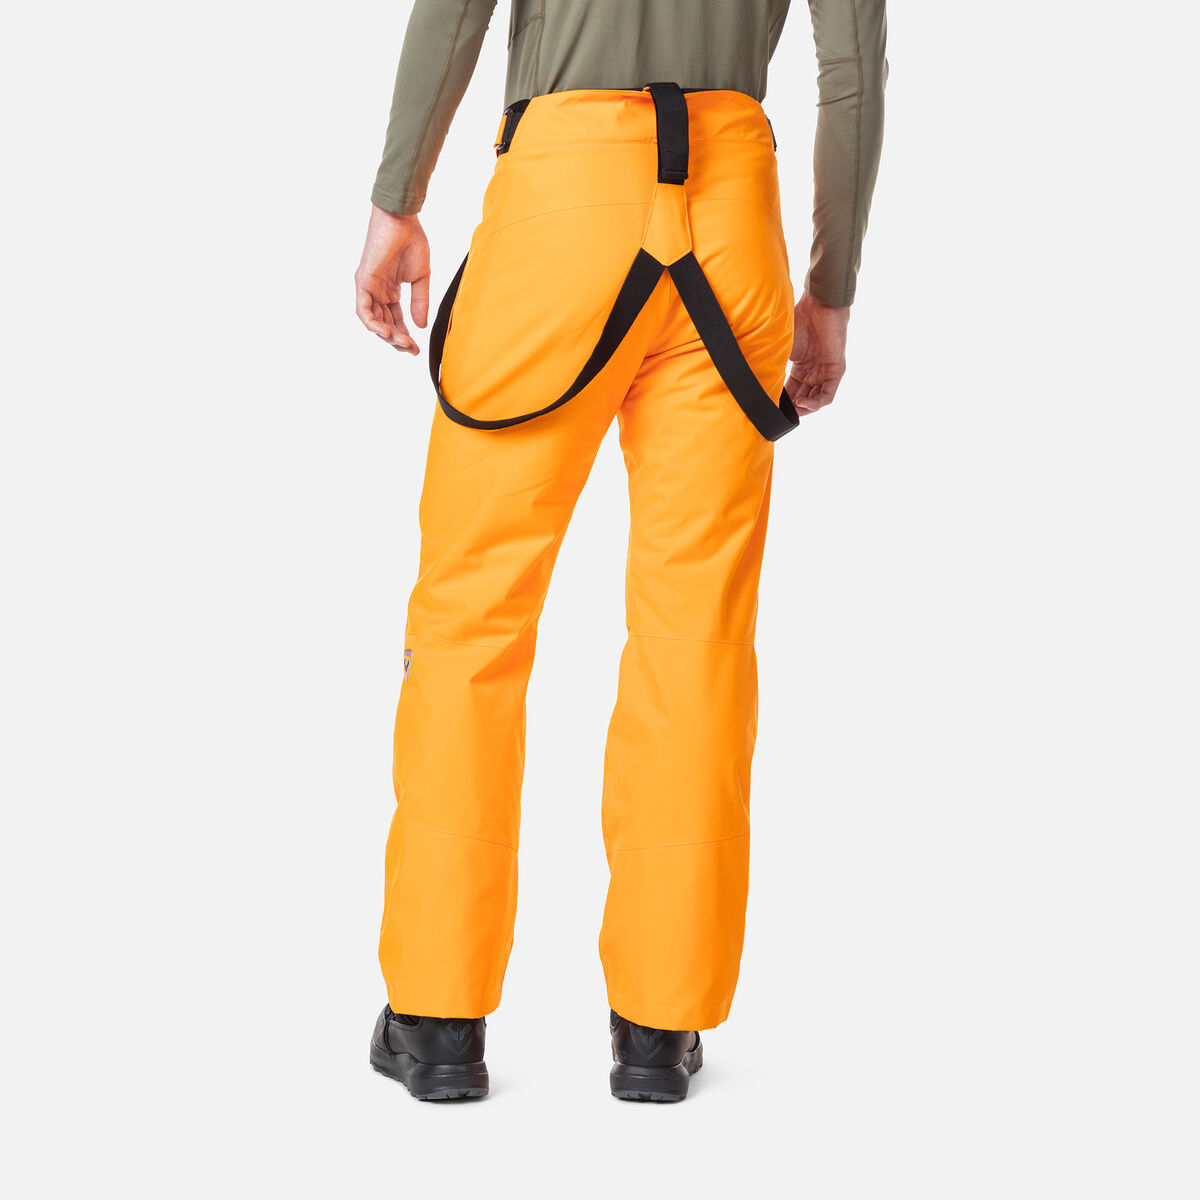 Rossignol Men's Ski Pants Orange